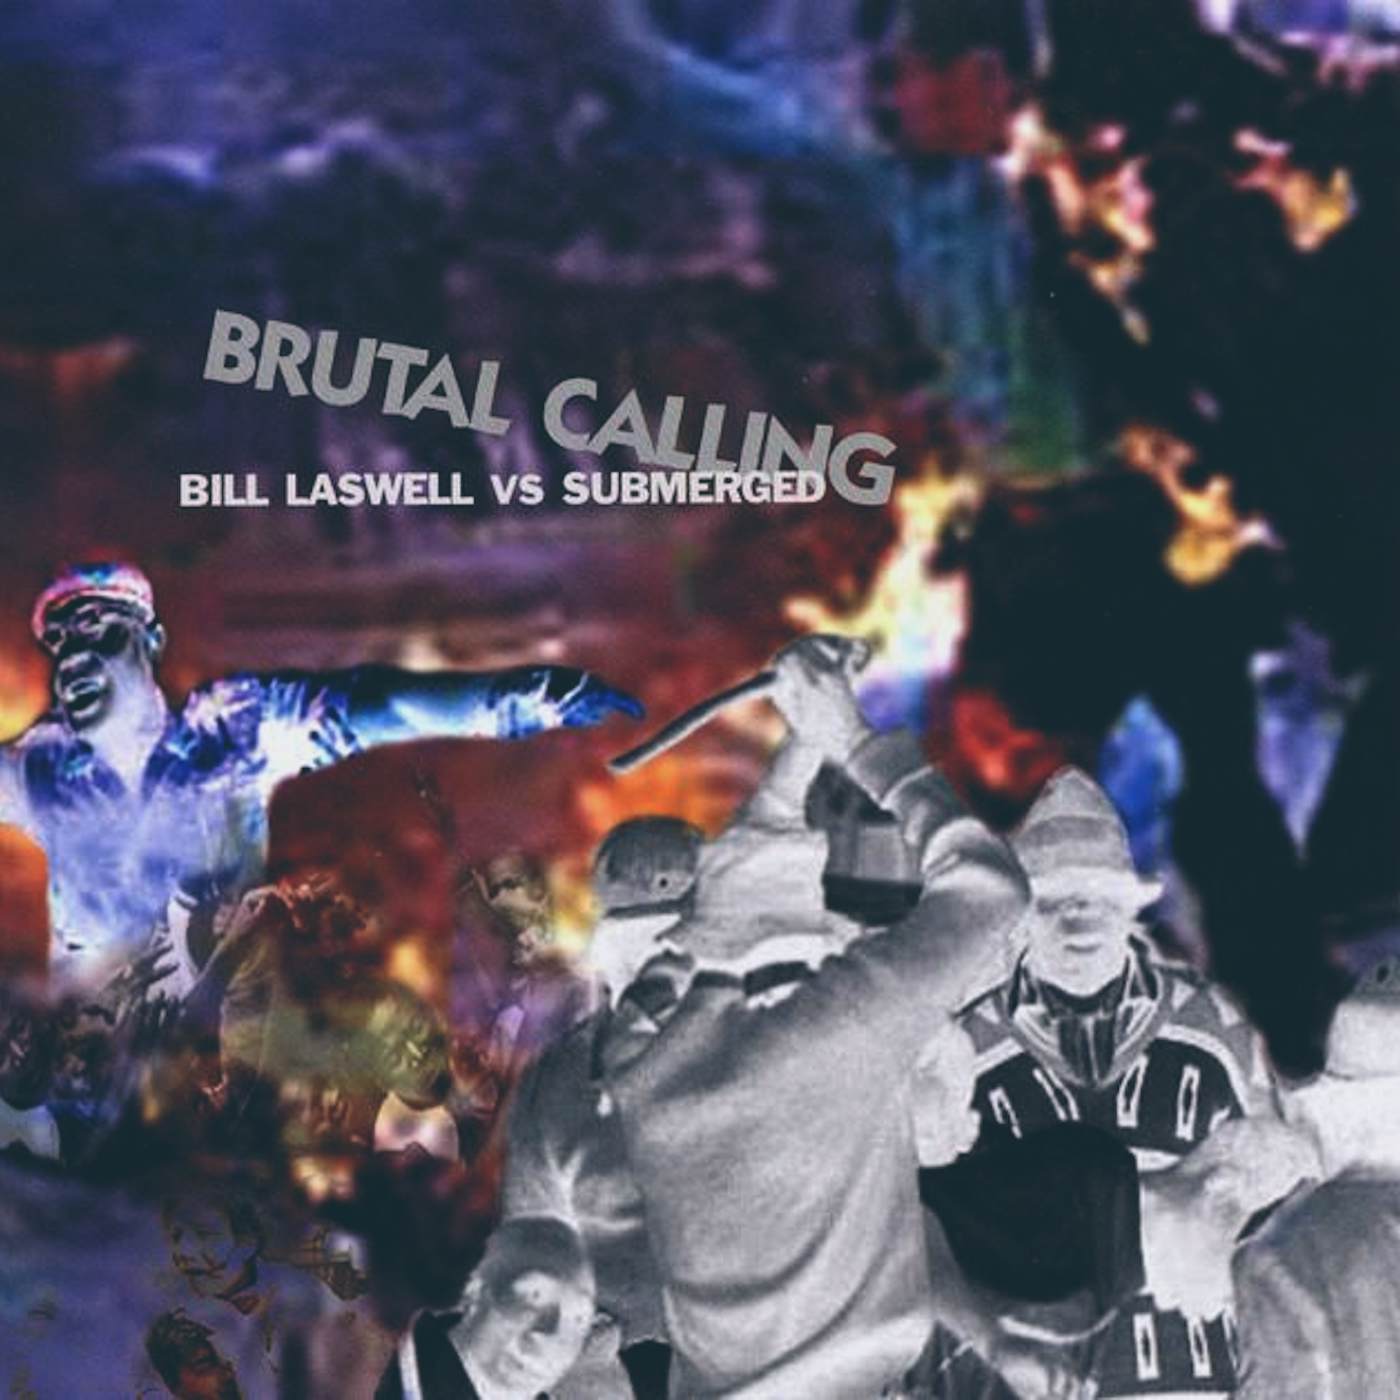 BILL LASWELL VS SUBMERGED